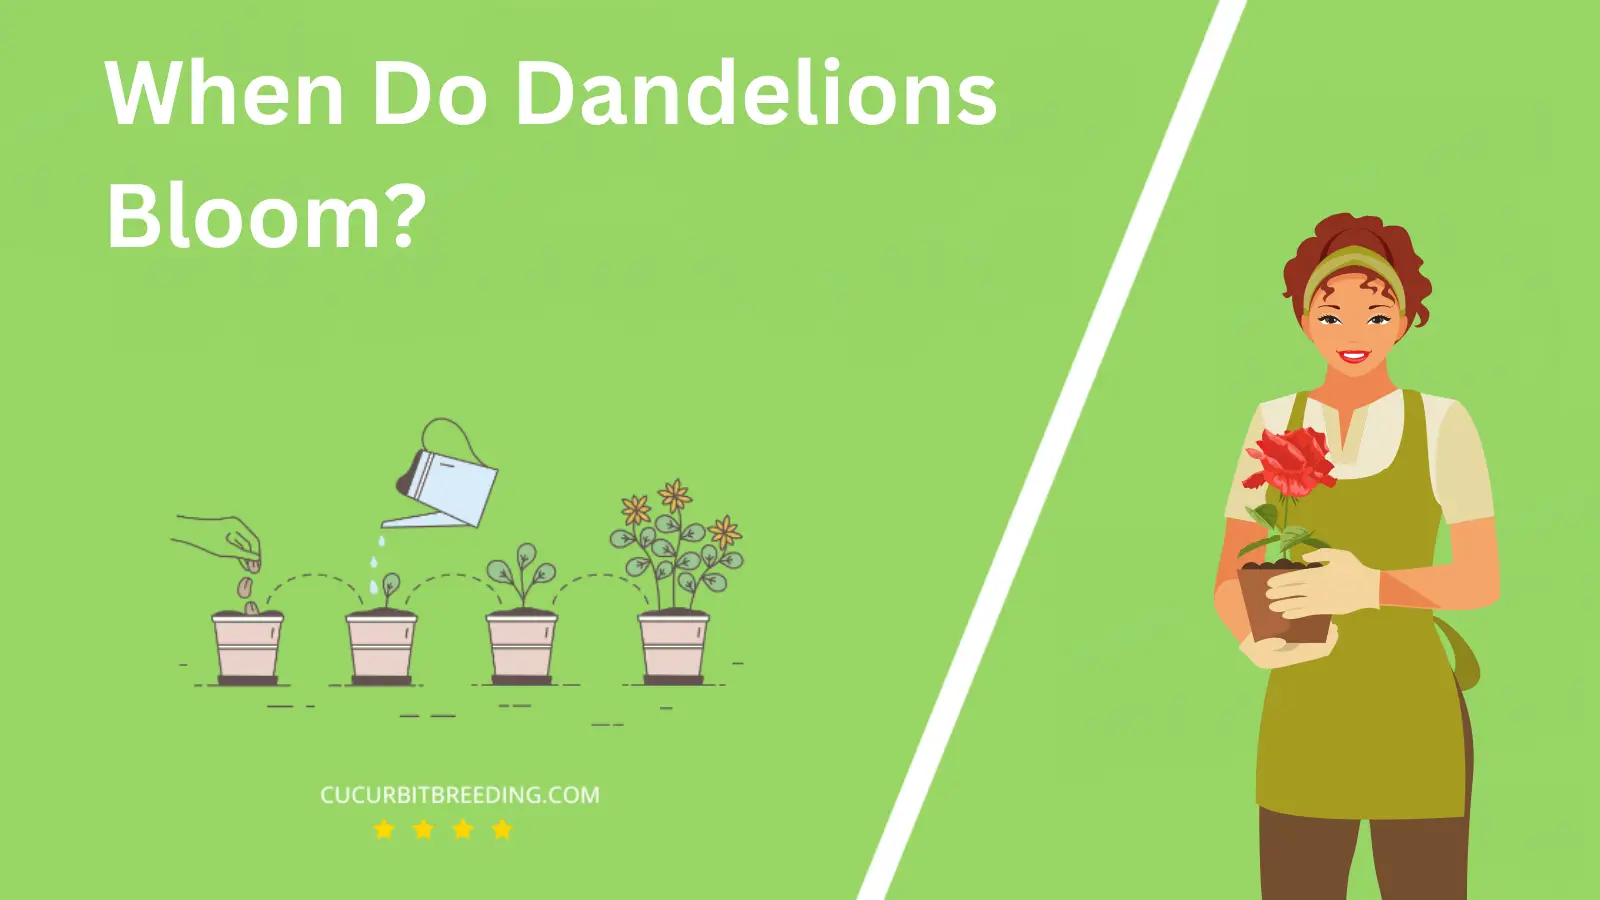 When Do Dandelions Bloom?